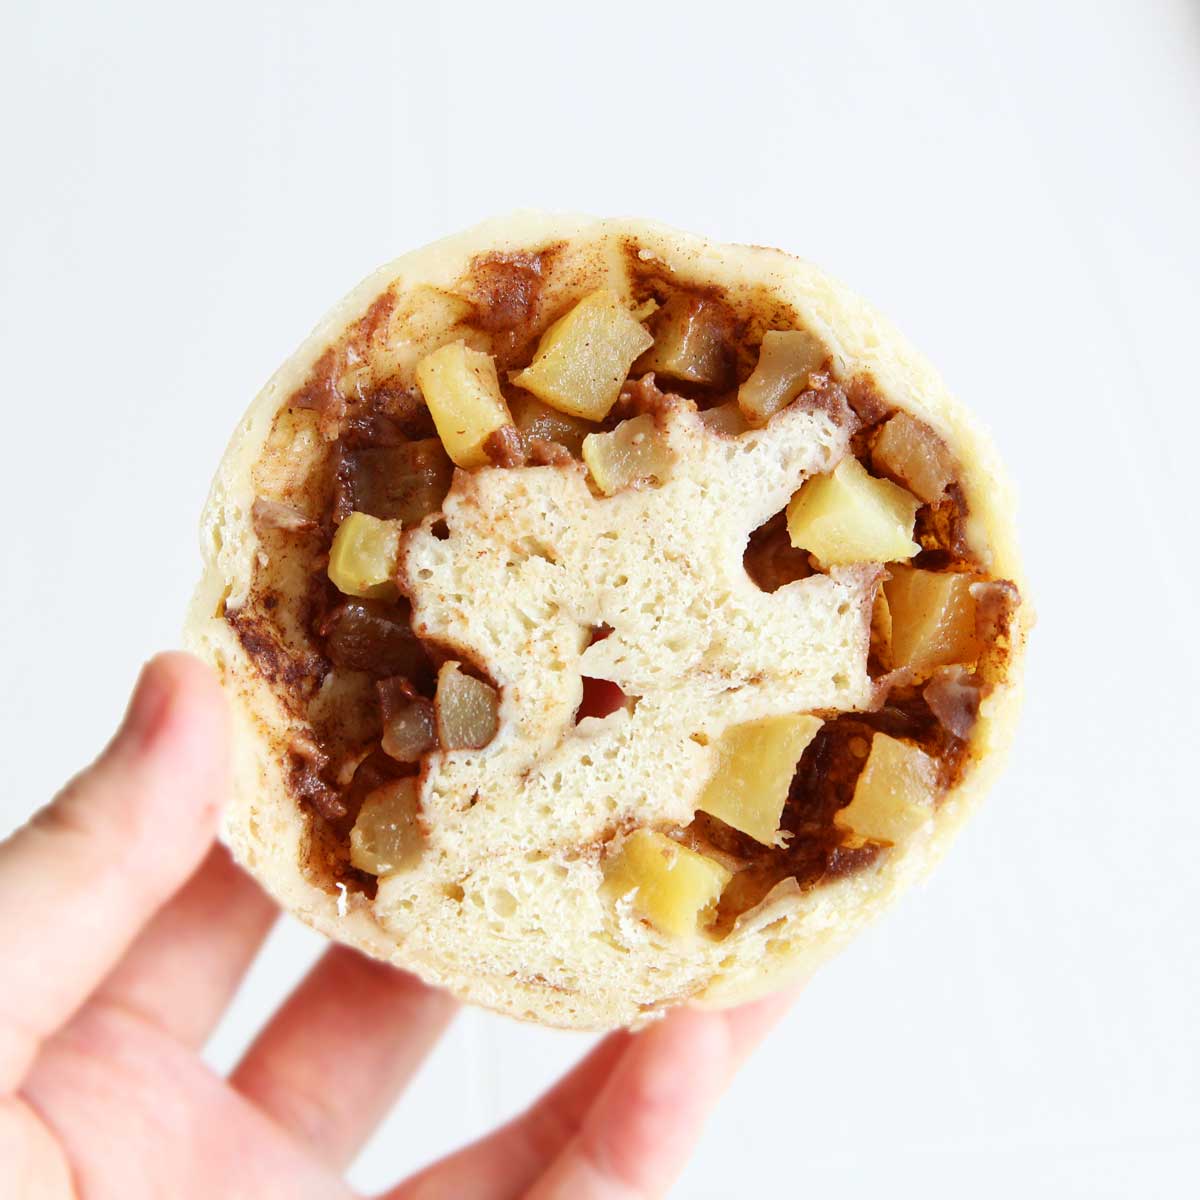 Vegan Apple Pie Stuffed Bagels (A Healthier, Fat-Free Recipe) - Canned Chickpea Yeast Bread